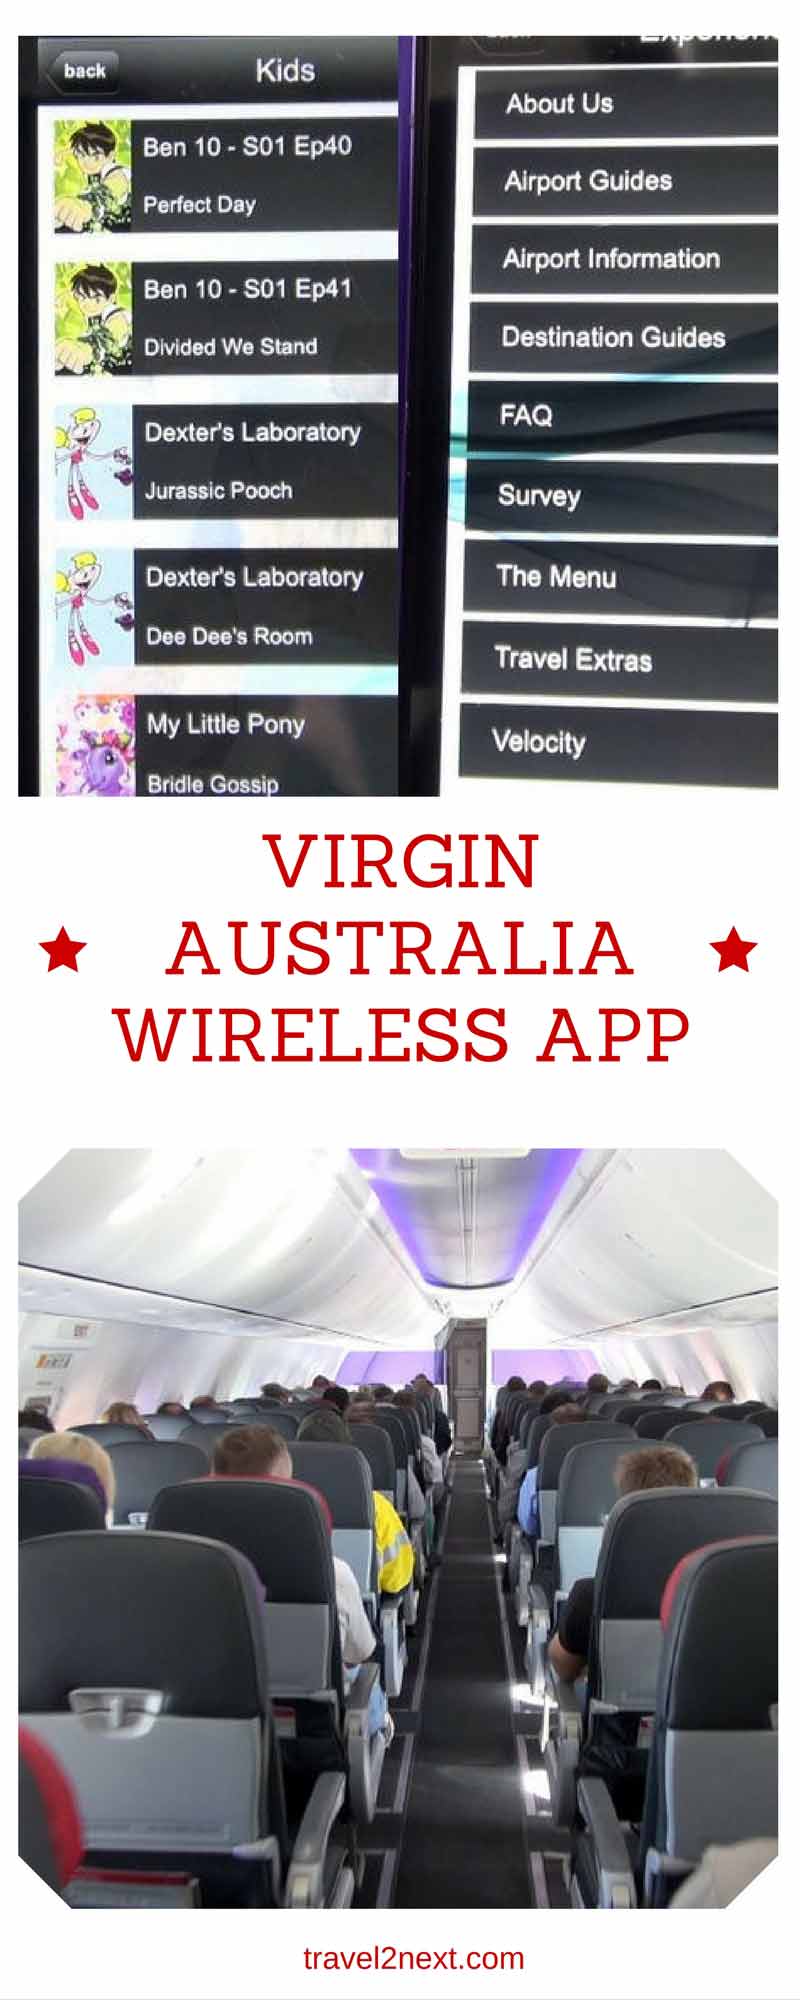 Virgin Australia Wireless app